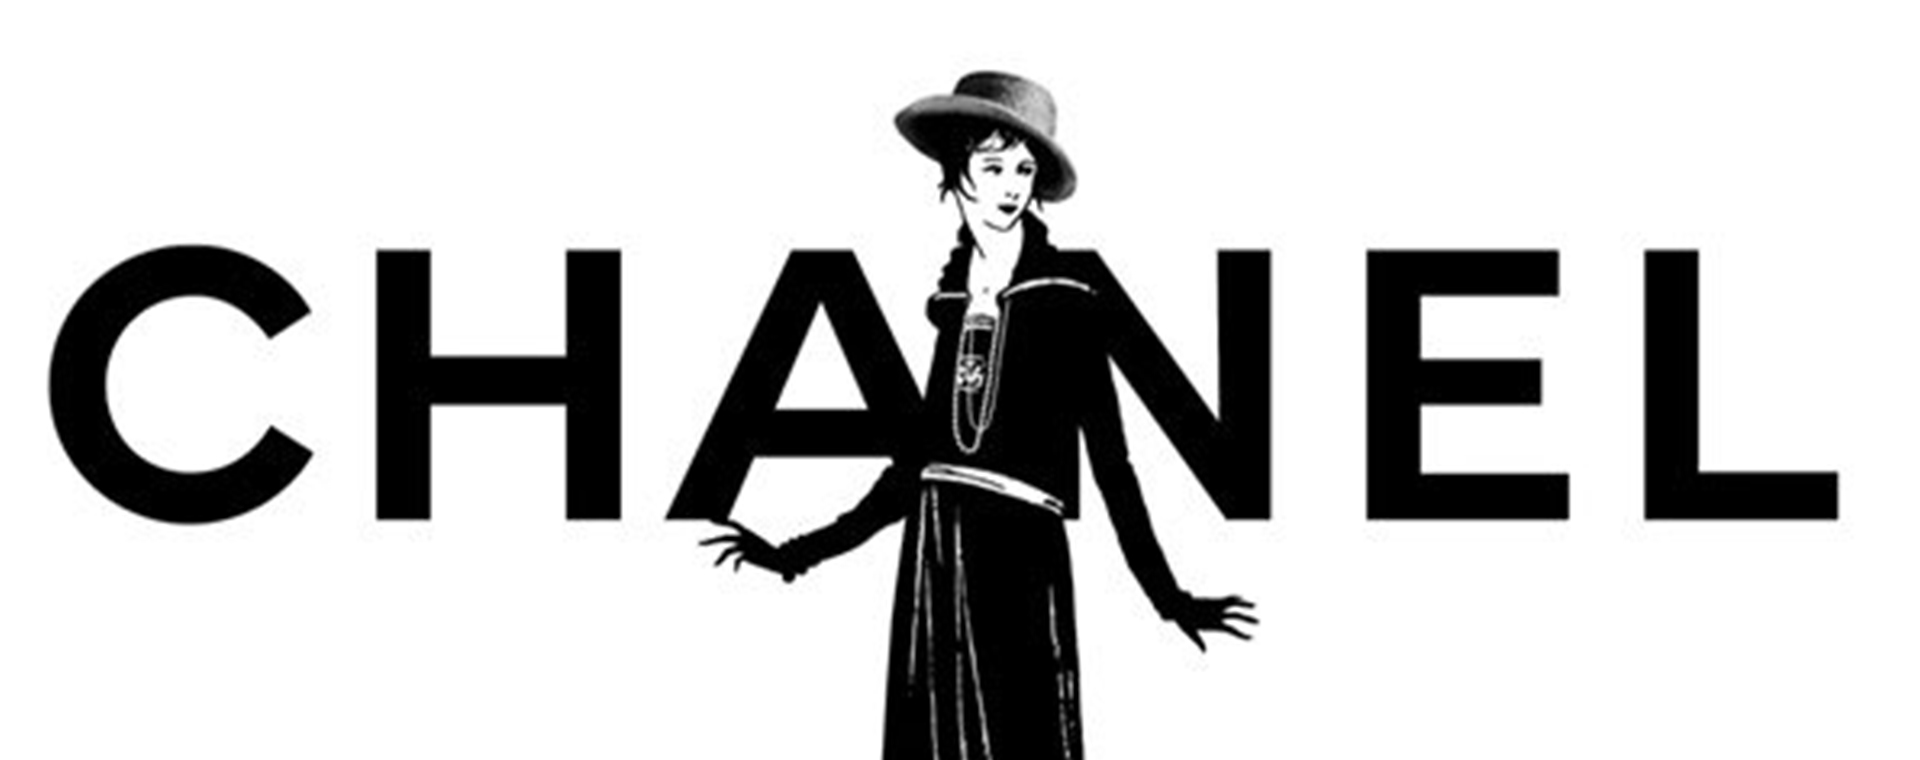 Quiz Coco Chanel  Le monde de la mode  Culture generale France